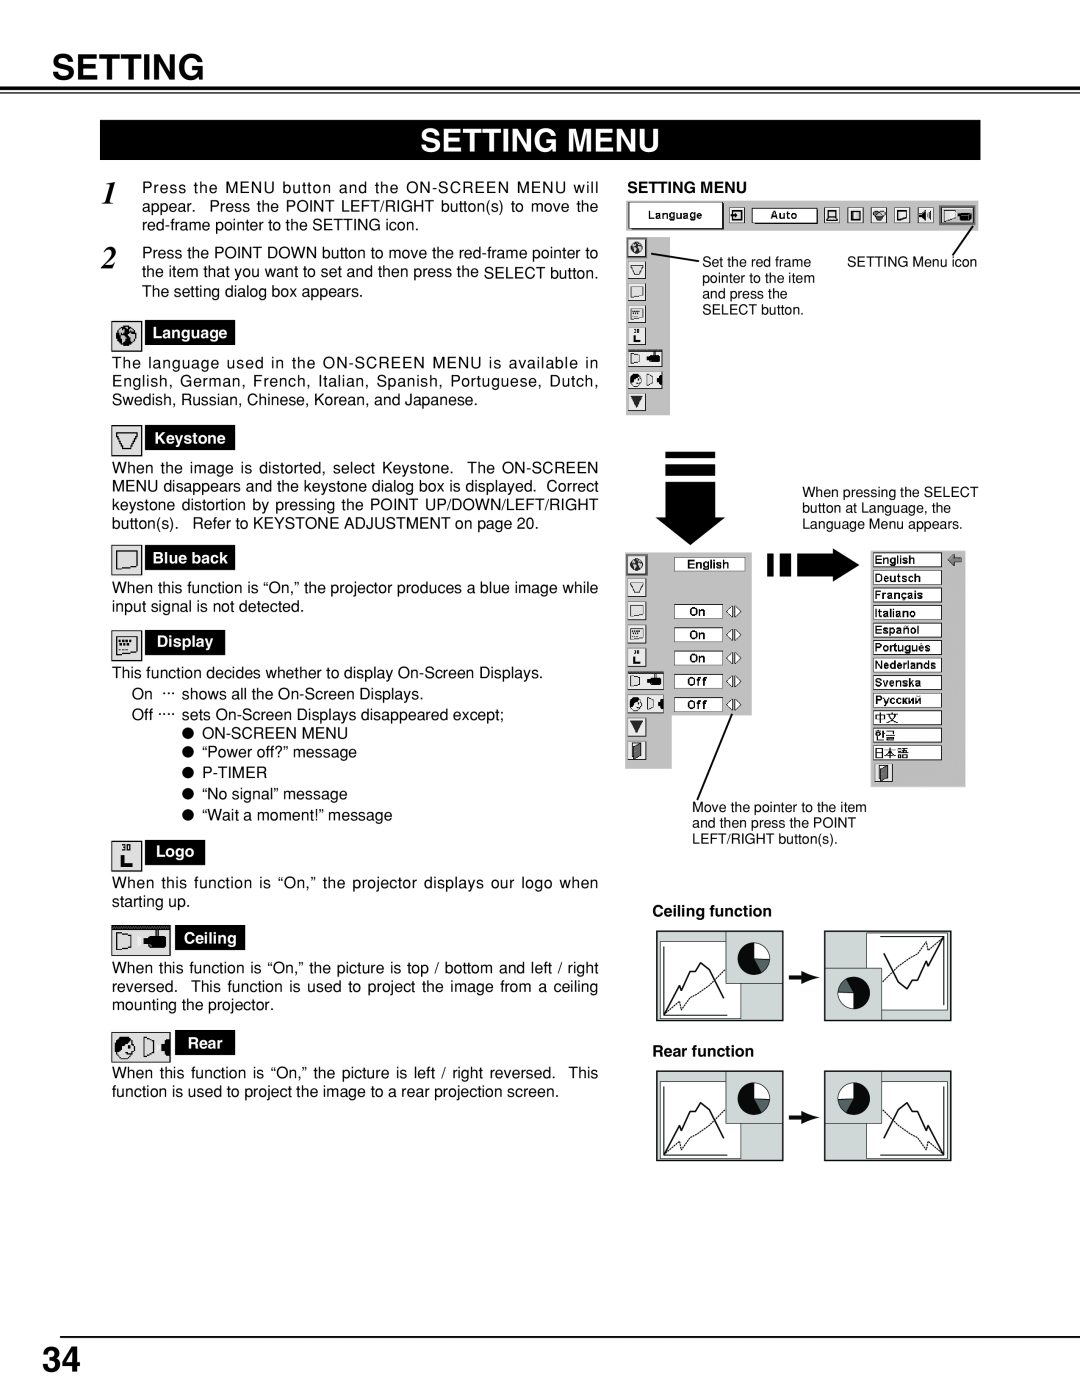 Eiki LC-XNB5M owner manual Setting Menu, Ceiling function Rear function 